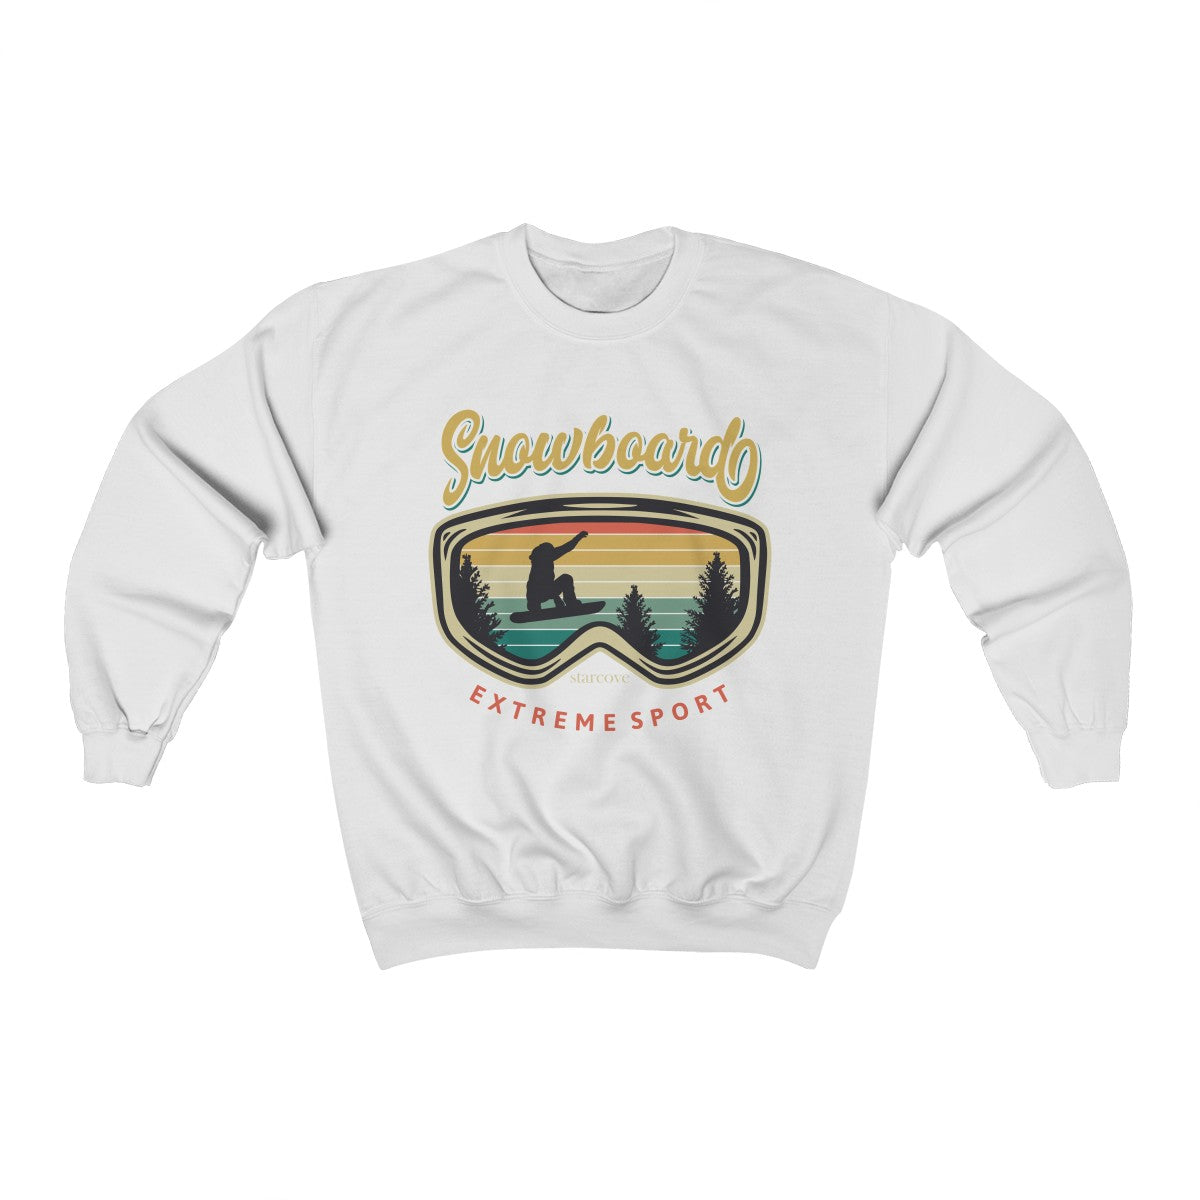 Snowboard Retro Goggles Sweatshirt, Vintage Men Women Extreme Sports Mountain Gift Boarding Crewneck Sweater Top Starcove Fashion